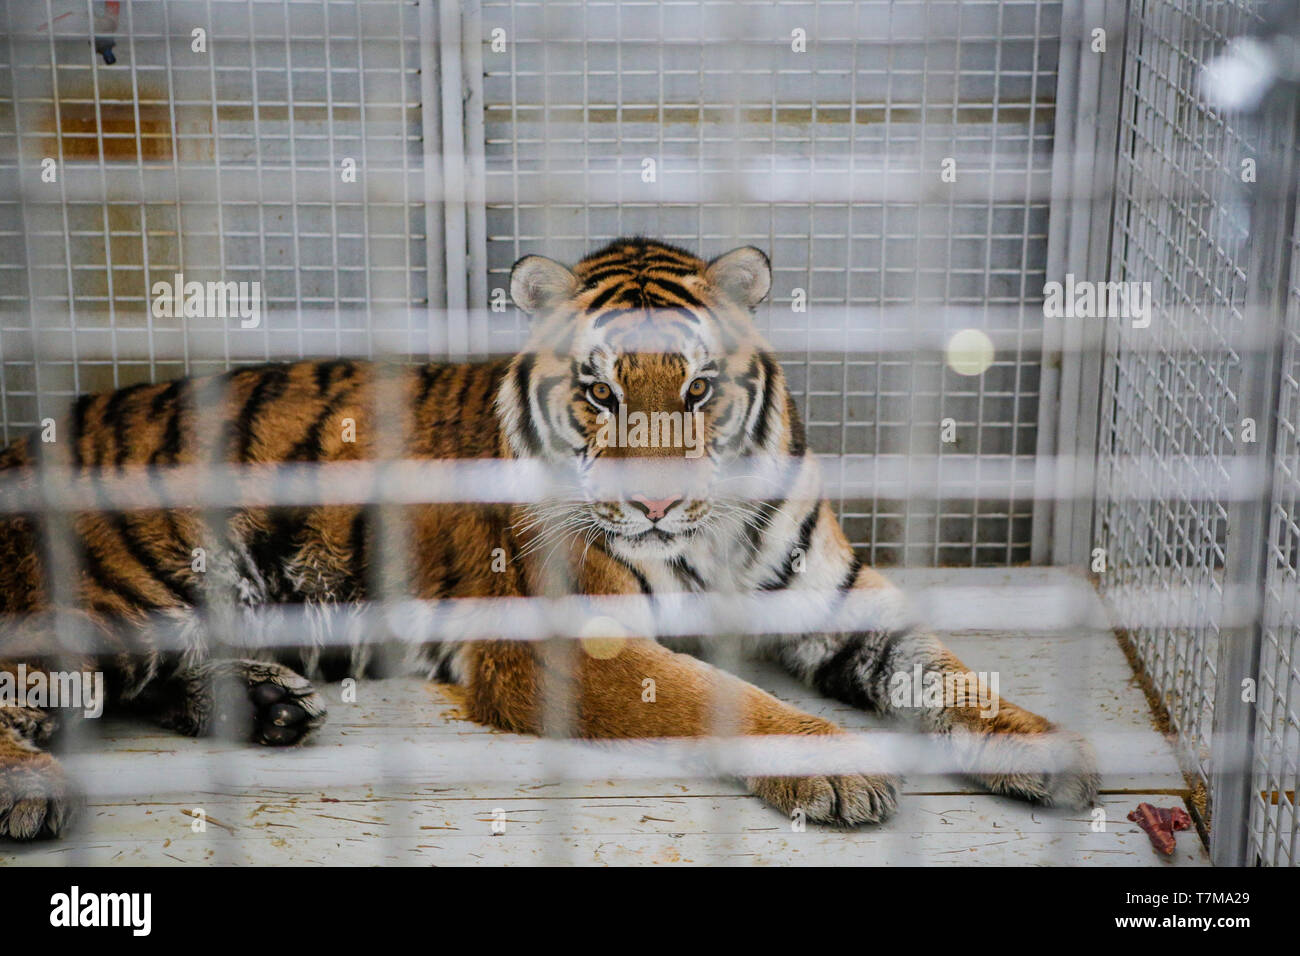 Tigre siberiano salvajes mantenidos en jaulas dentro de un circo menagerie - maltrato animal Foto de stock